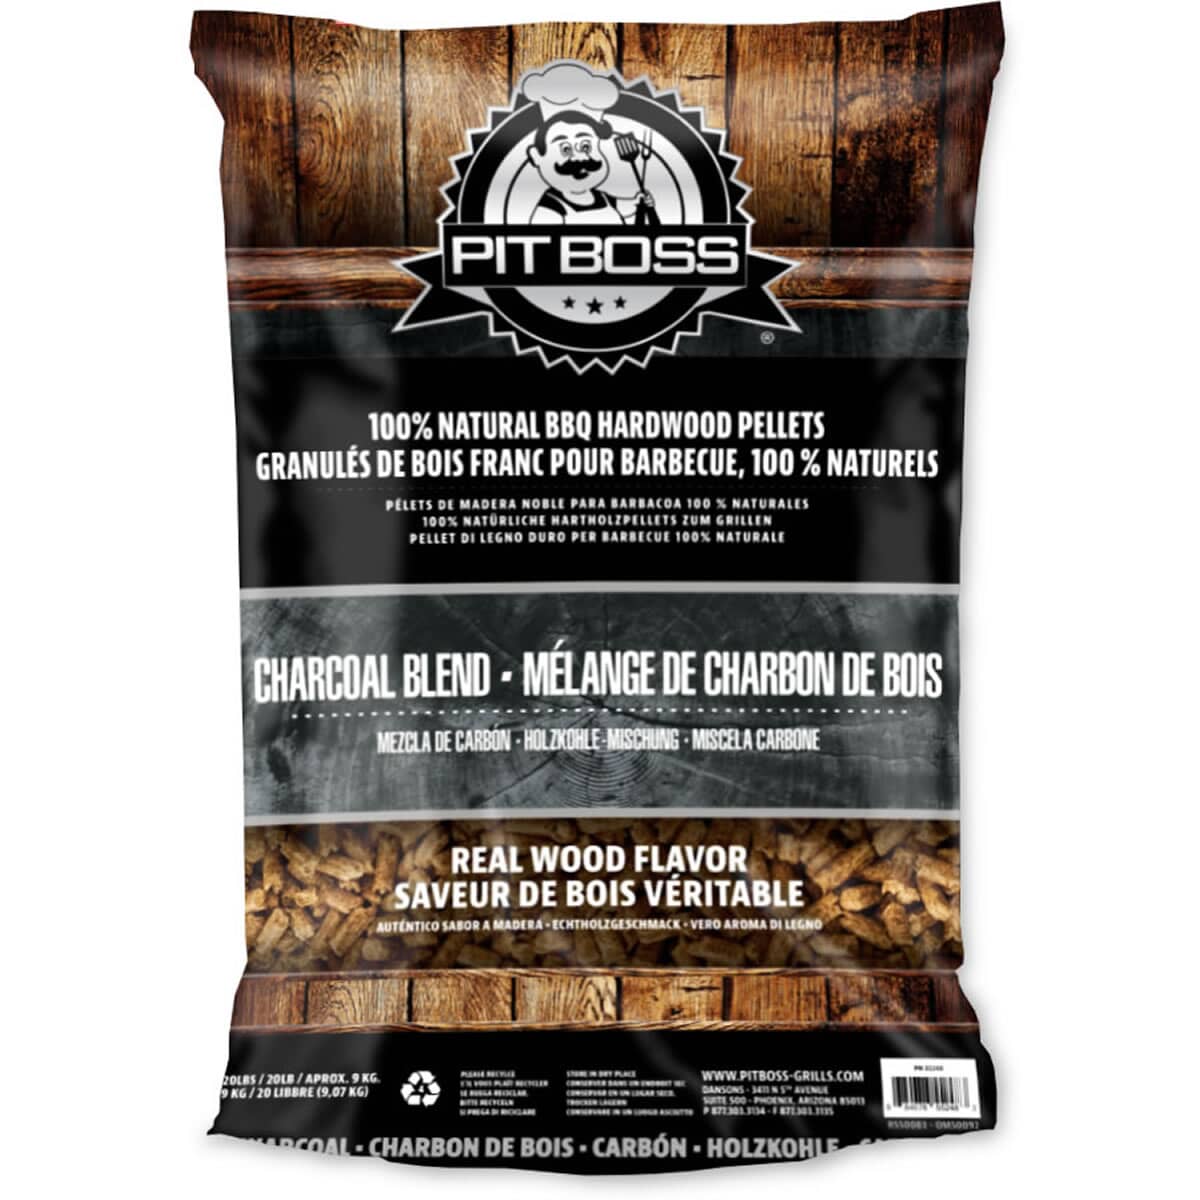 pit boss all natural bbq hardwood pellets